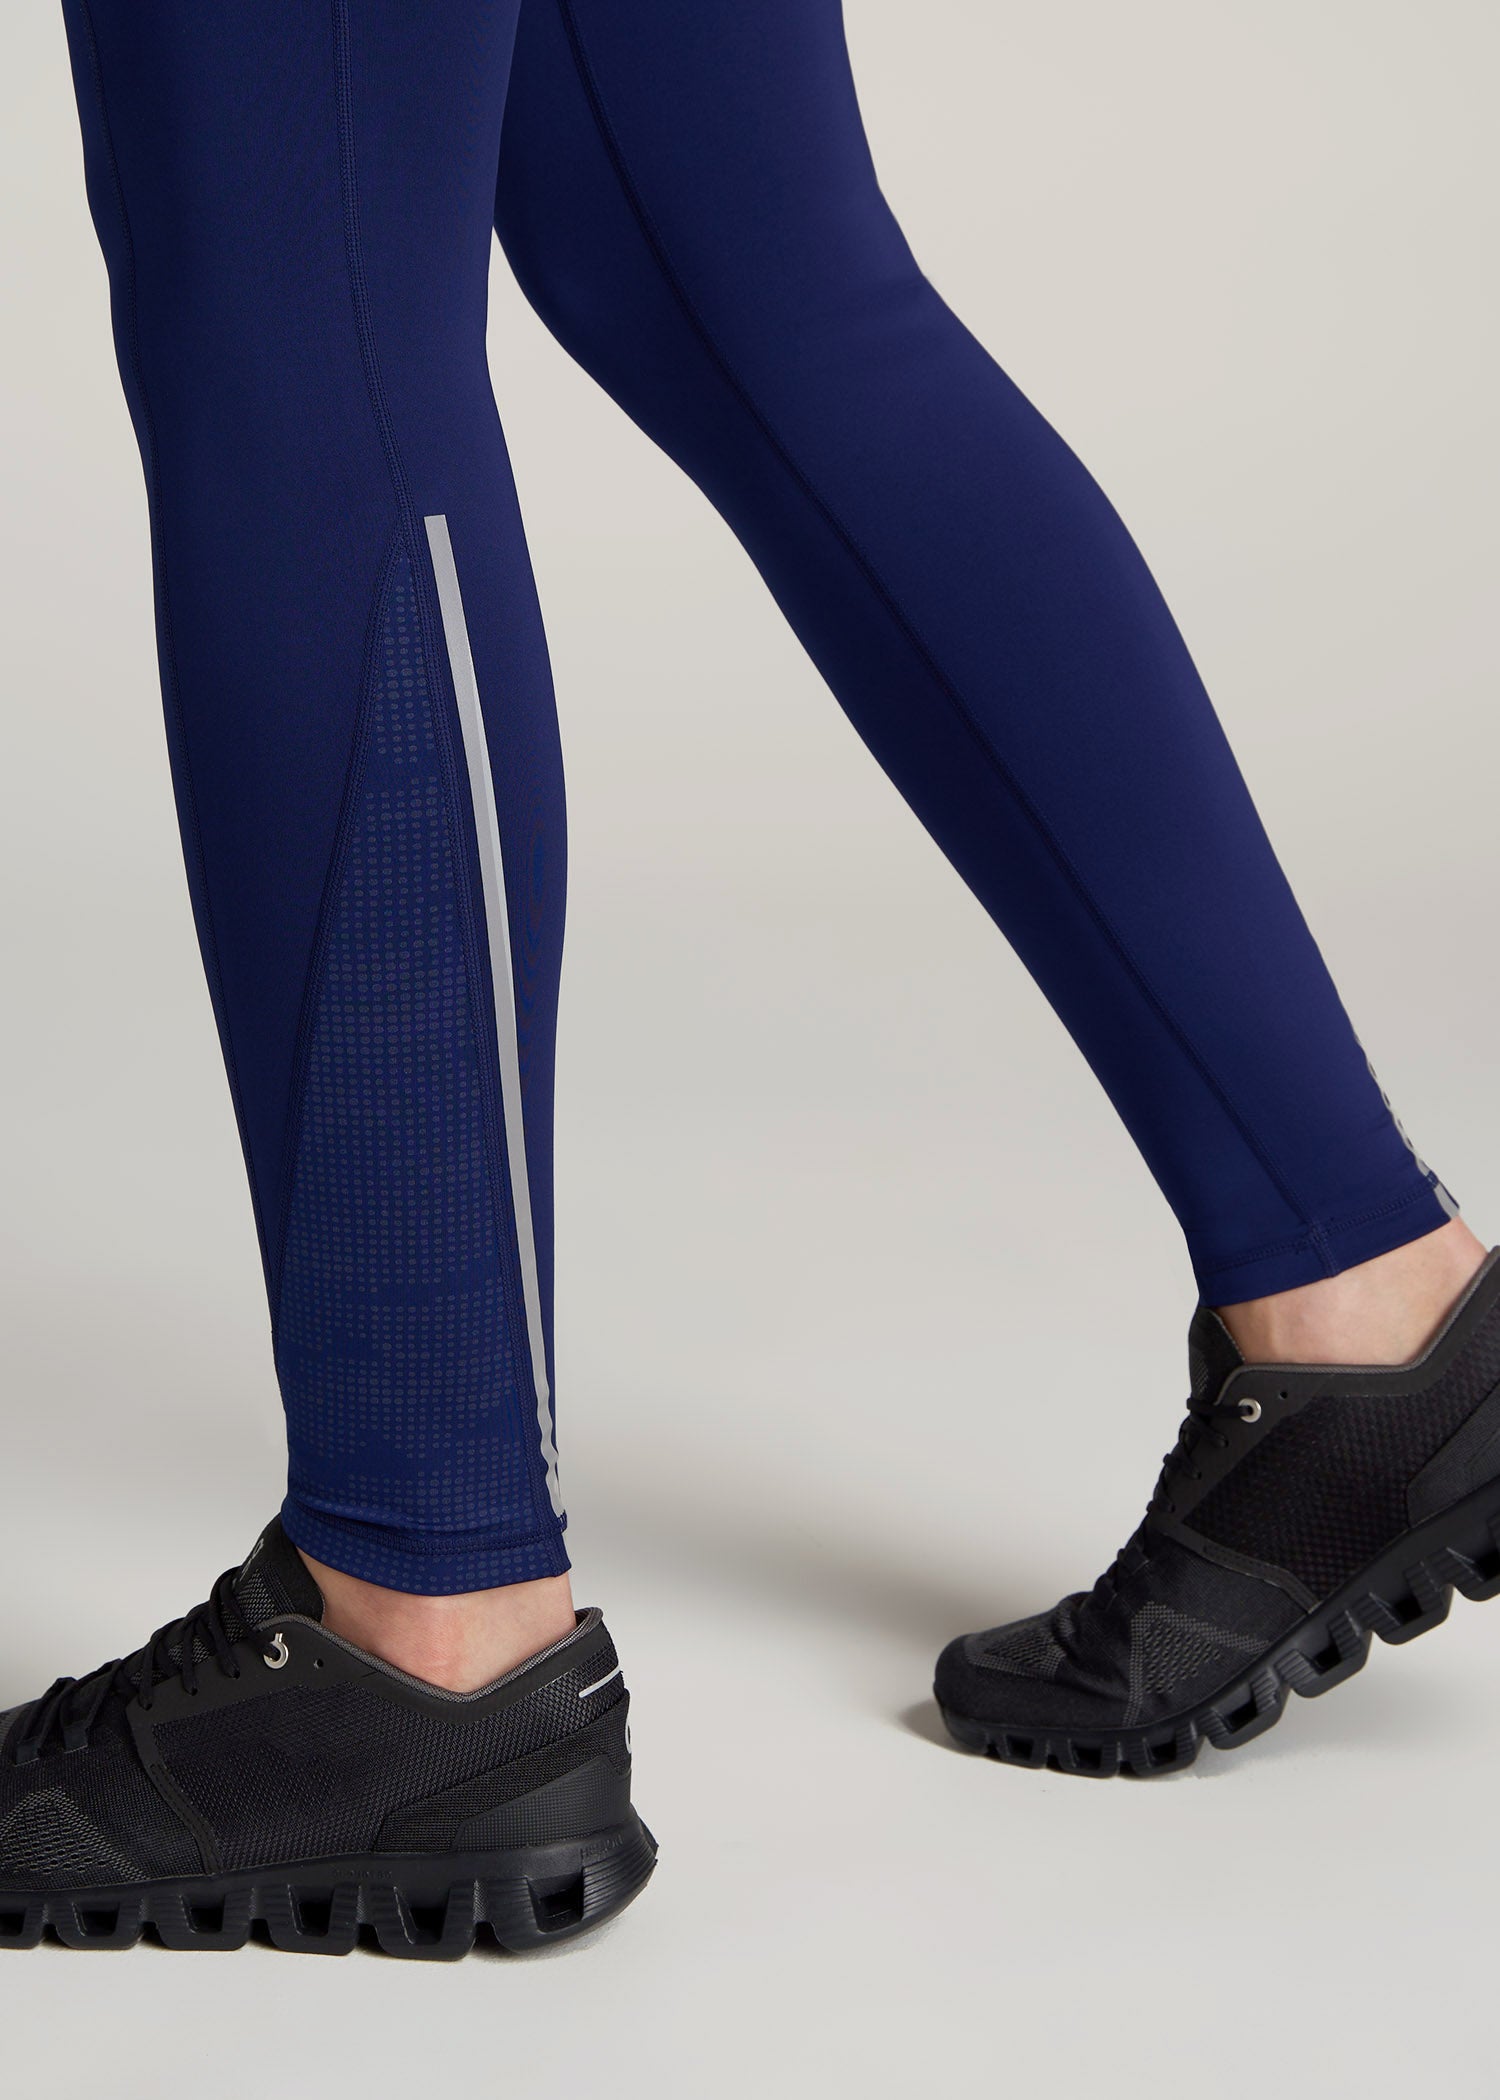 Pink Paw Print Women's Activewear Leggings - Tall 33” inside leg